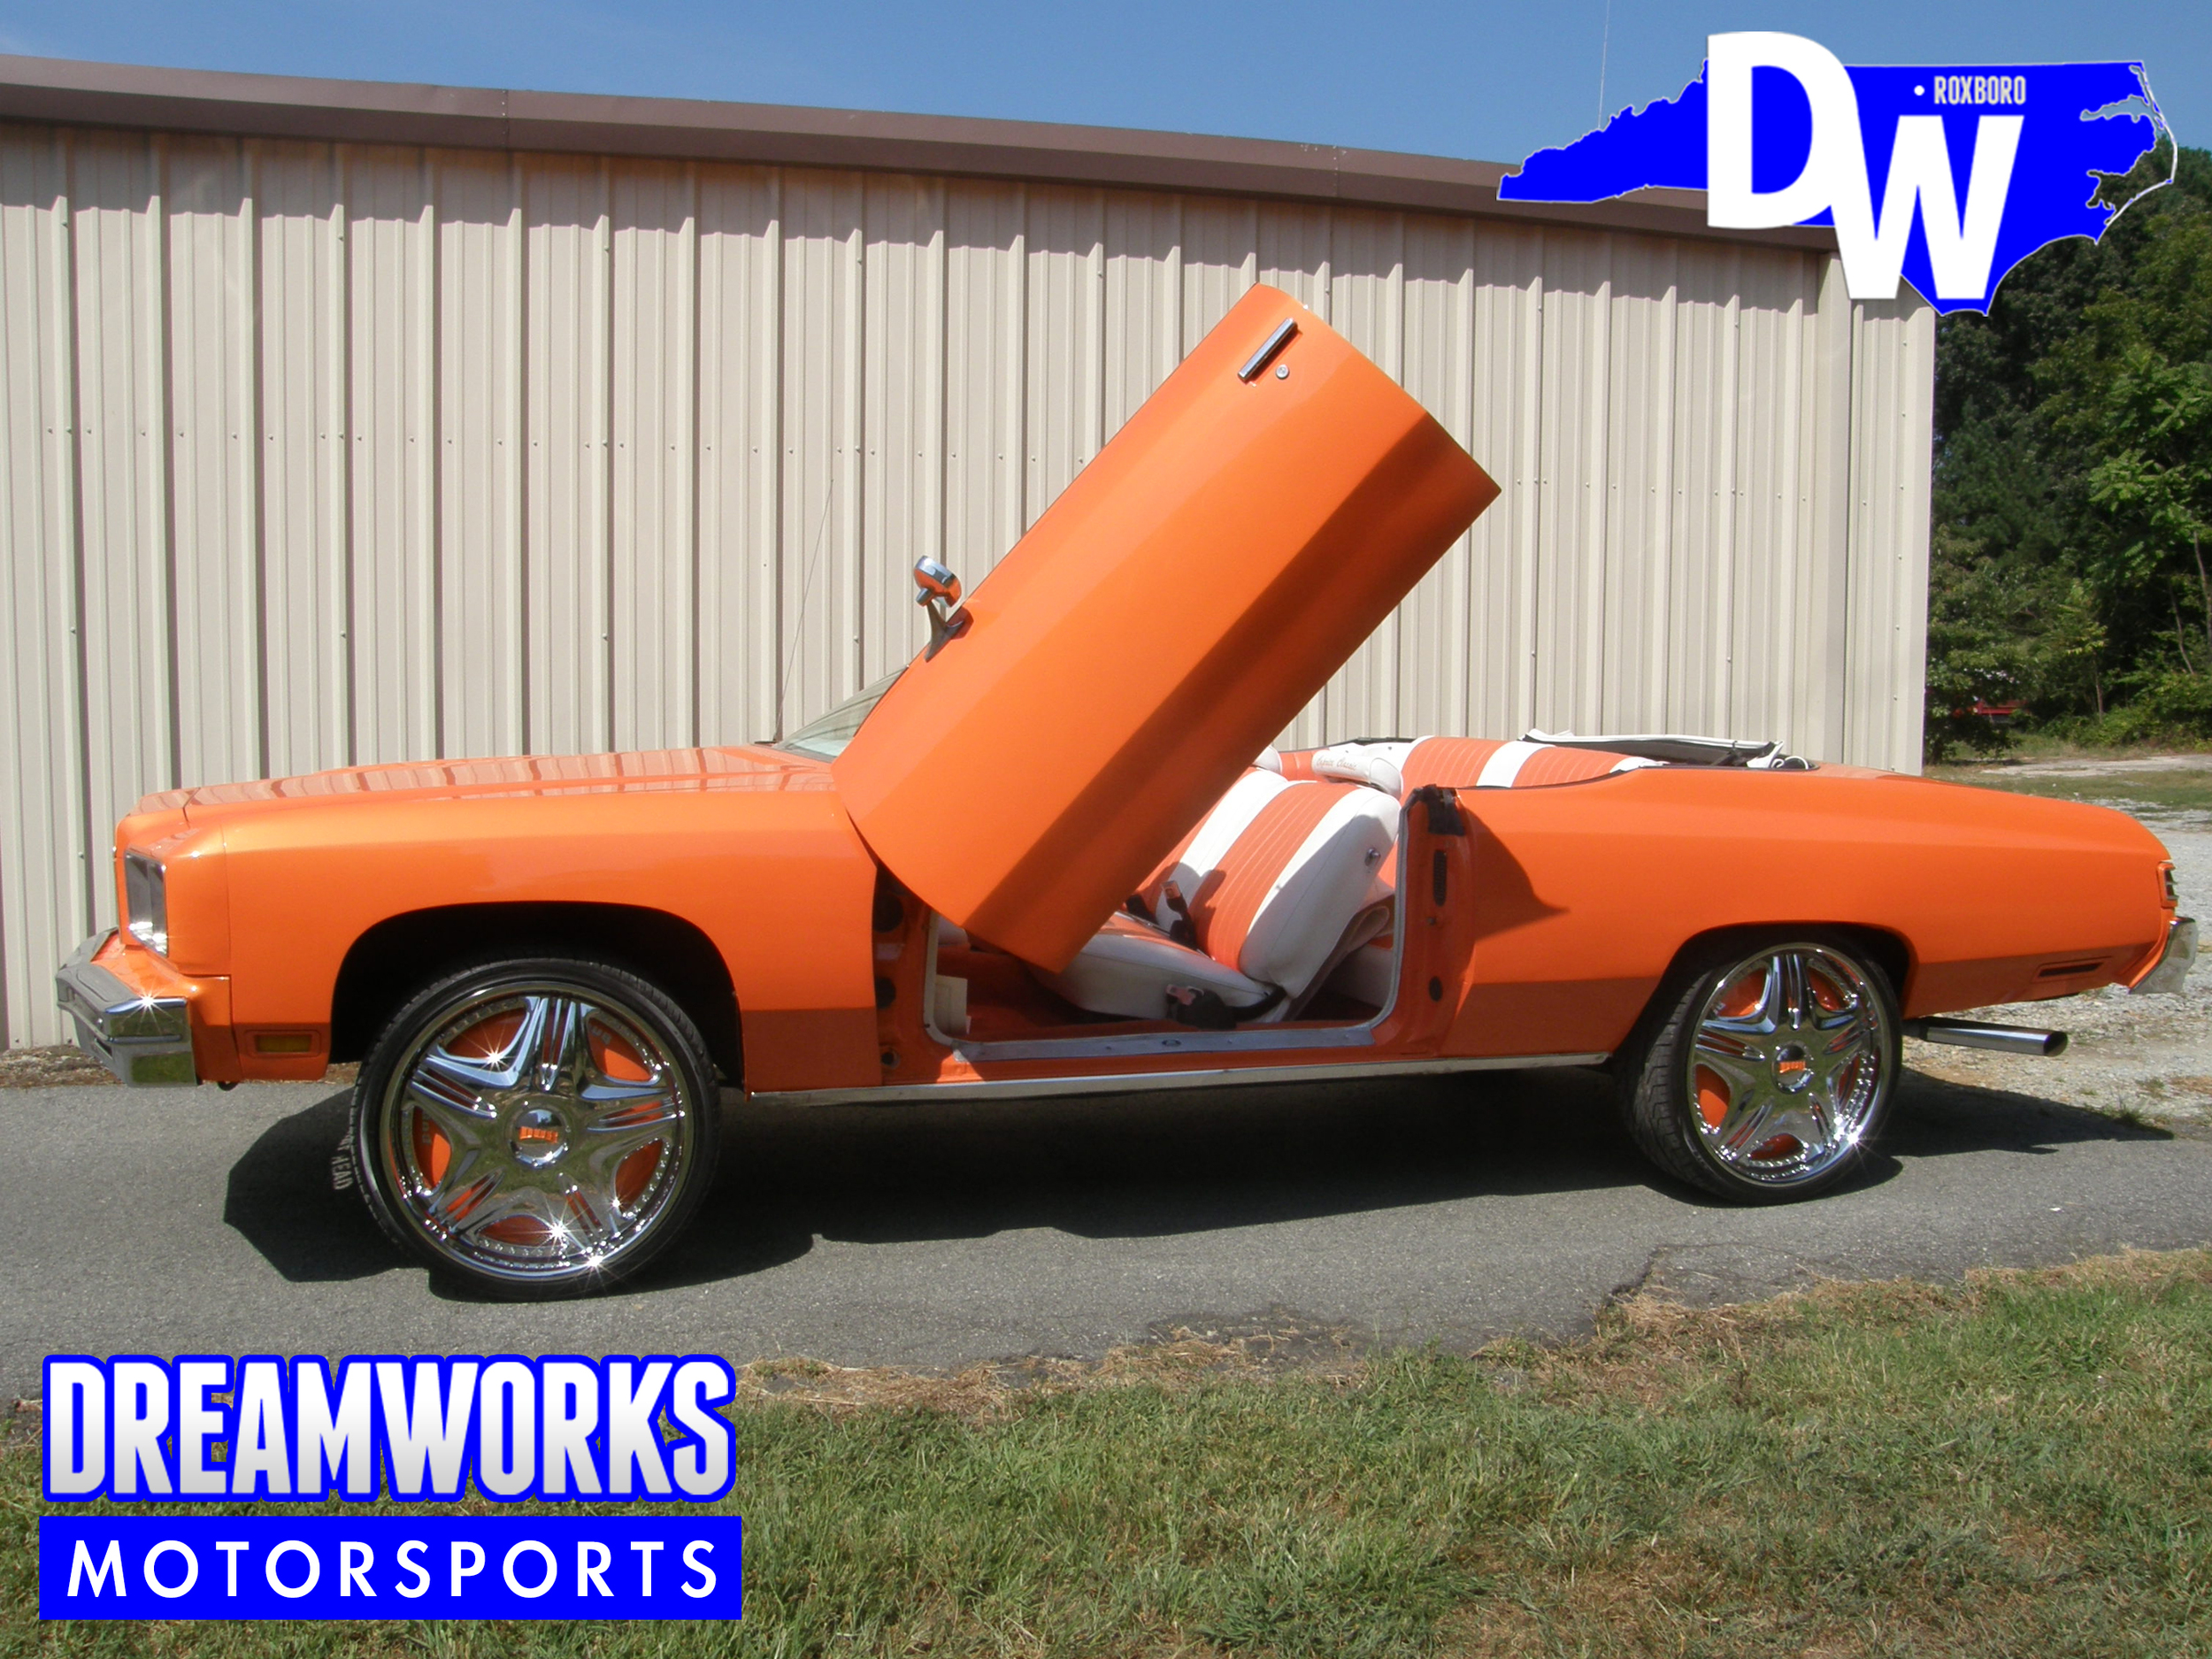 75-Chevrolet-Caprice-DUB-Dreamworks-Motorsports-2.jpg